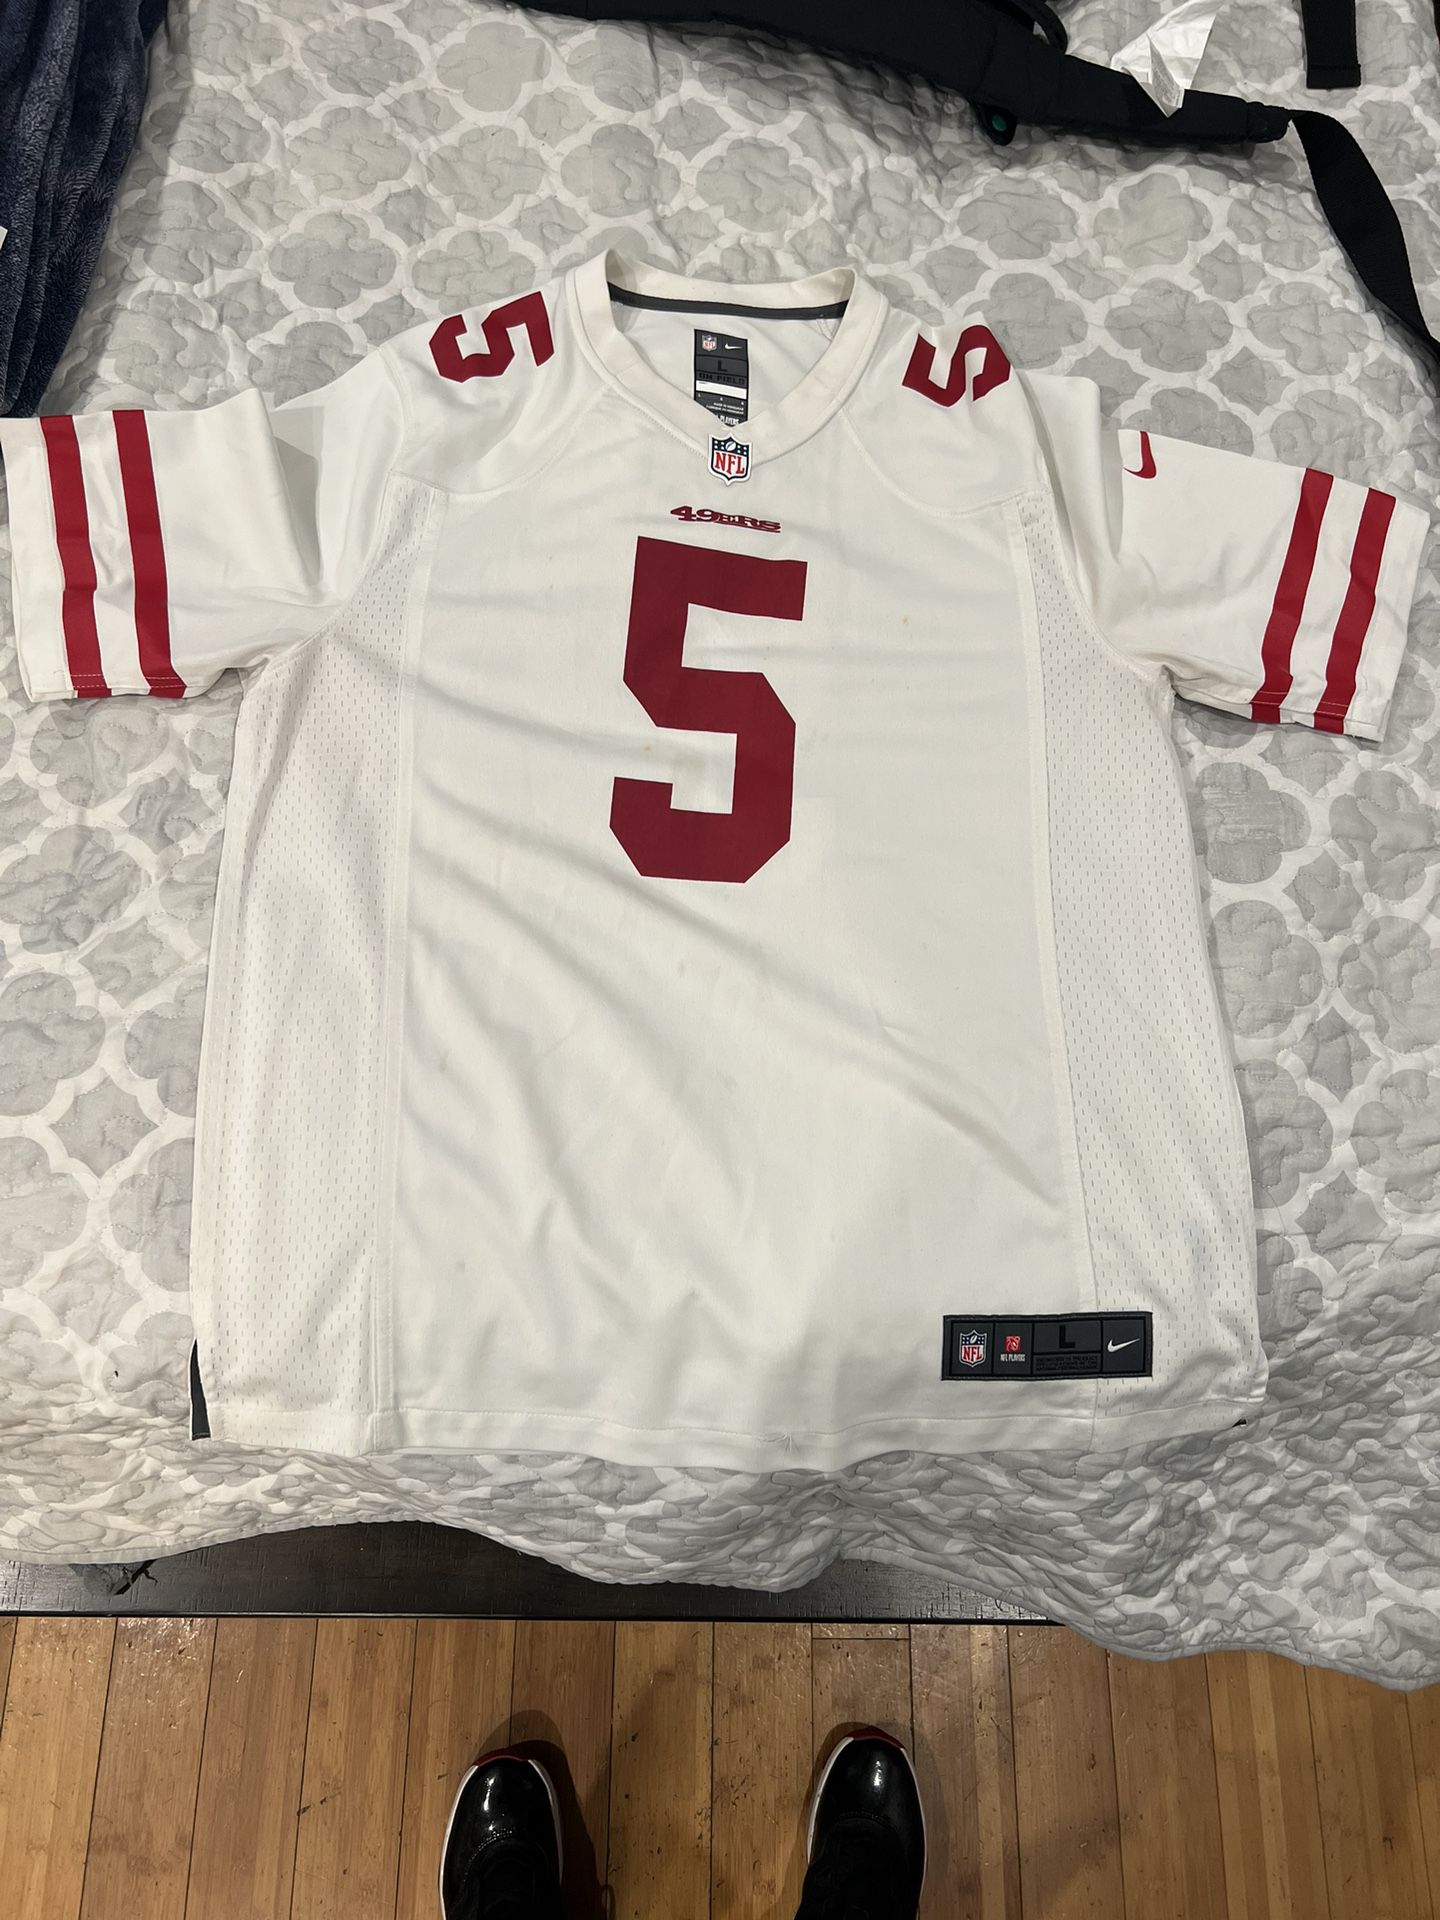 49er jersey (Size: Large)